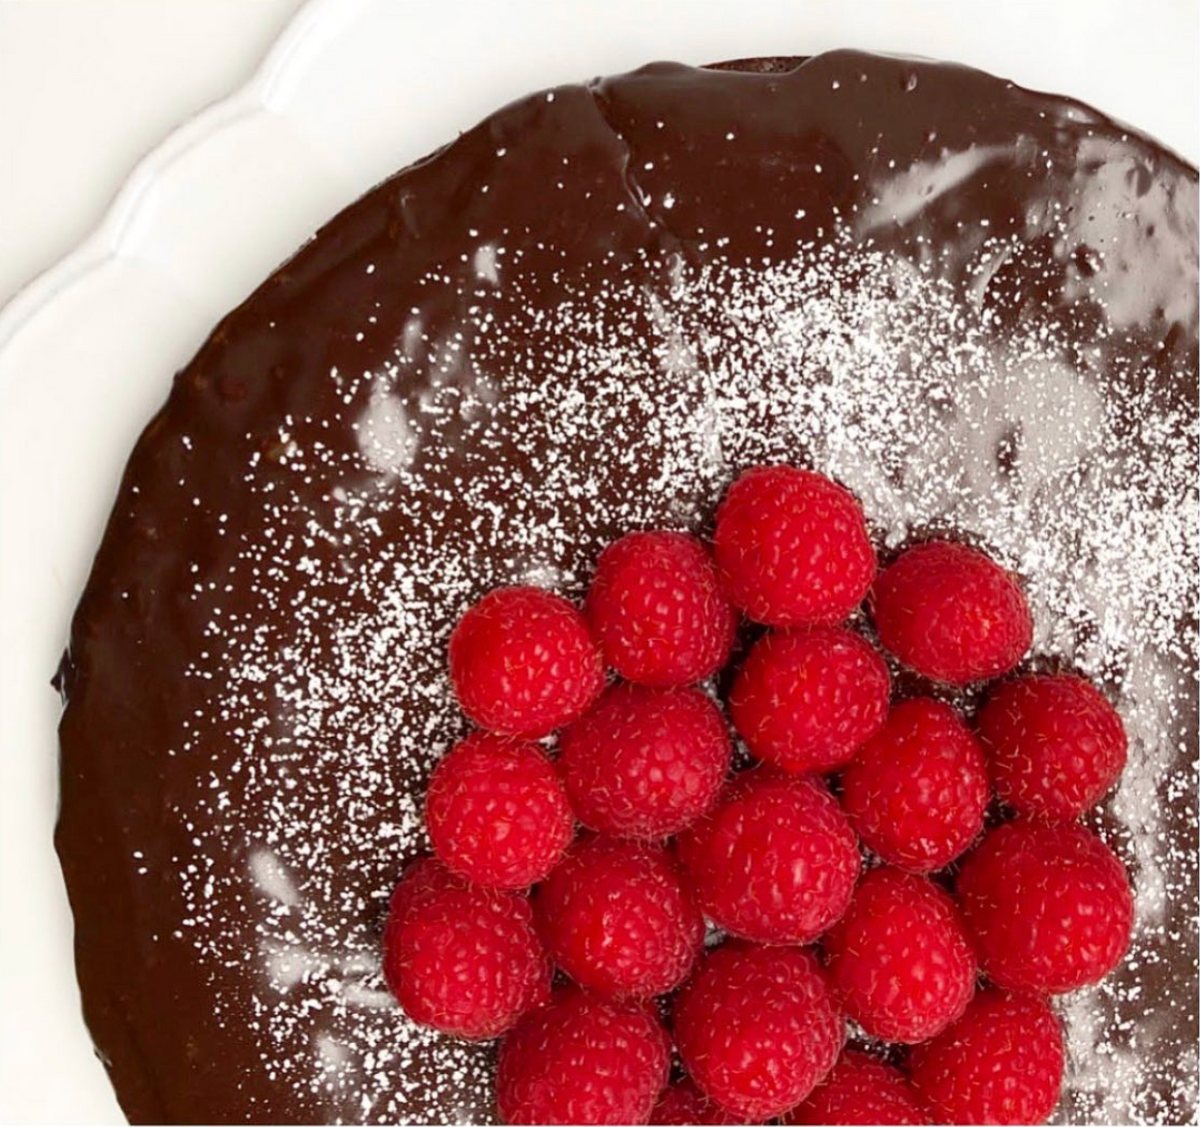 Flourless chocolate cake with powdered sugar and raspberries